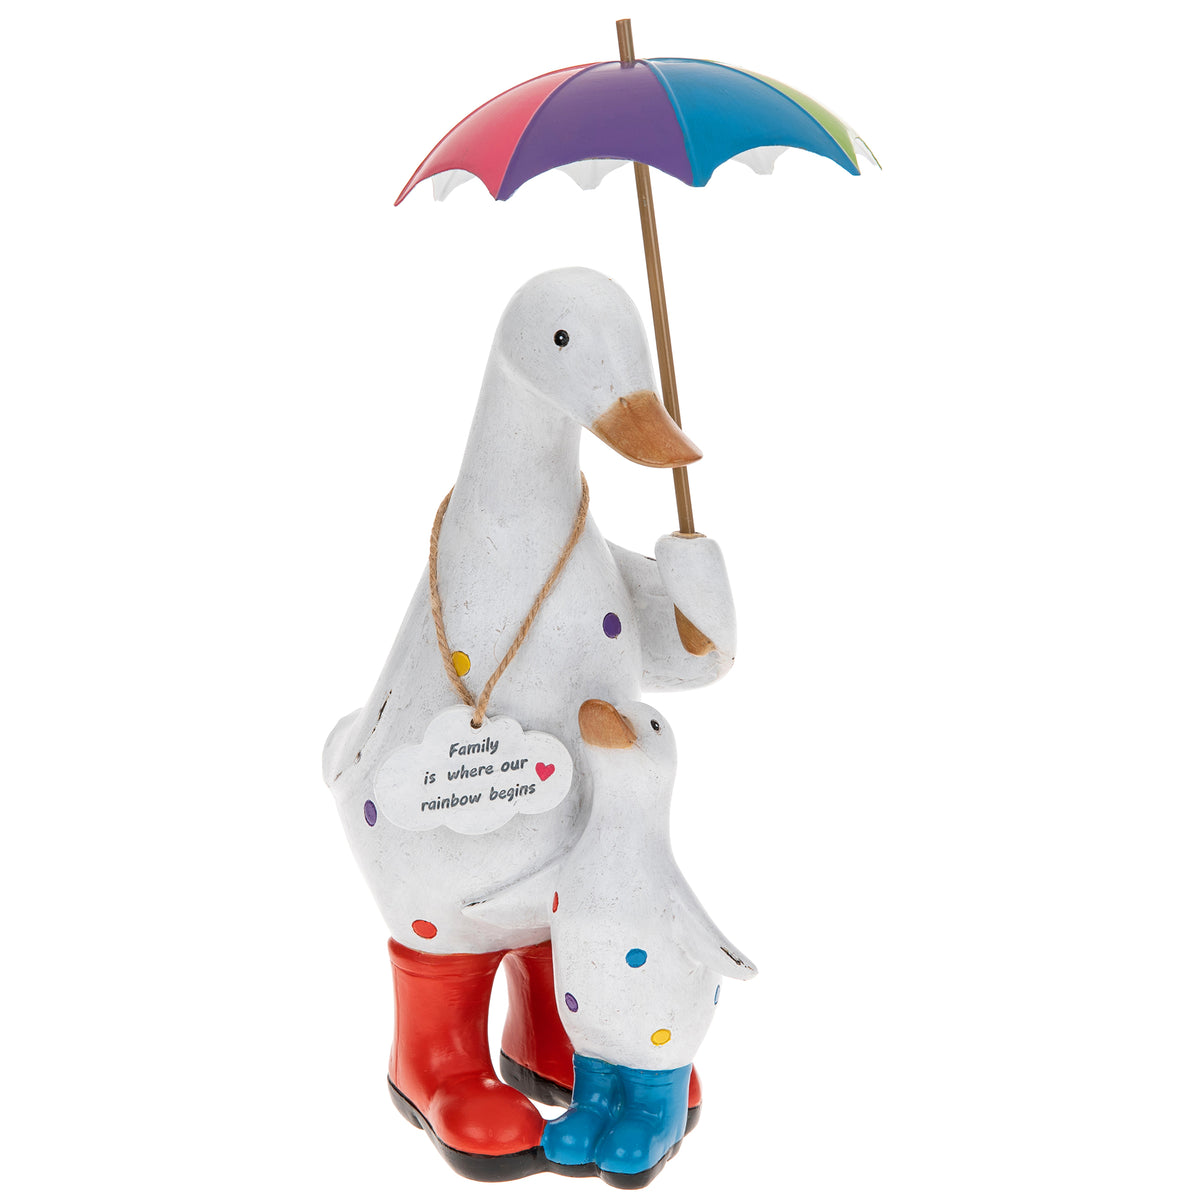 Family Duck Ornament with Rainbow Umbrella